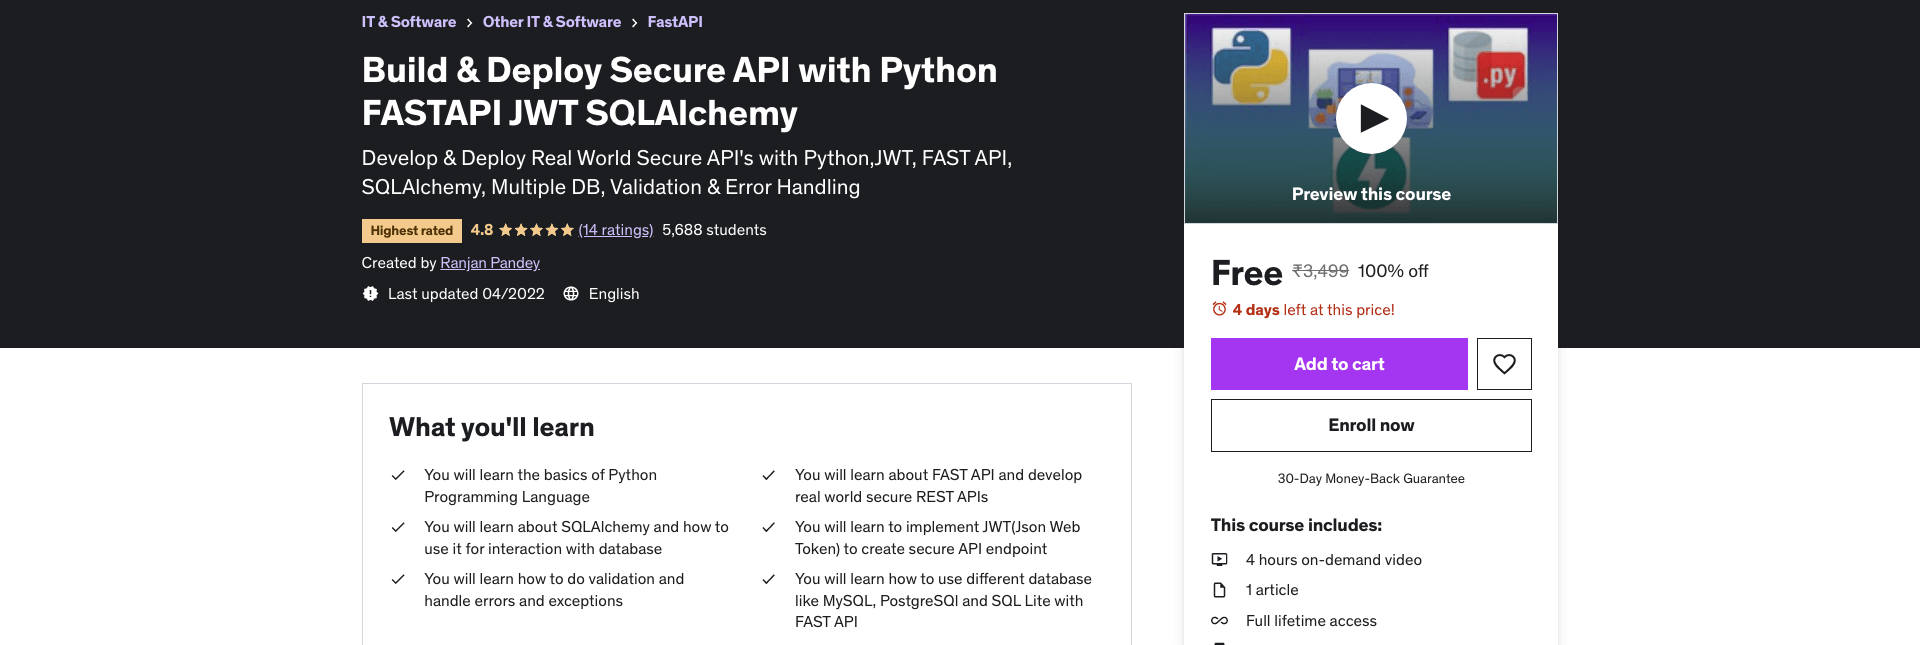 Build & Deploy Secure API with Python FASTAPI JWT SQLAlchemy